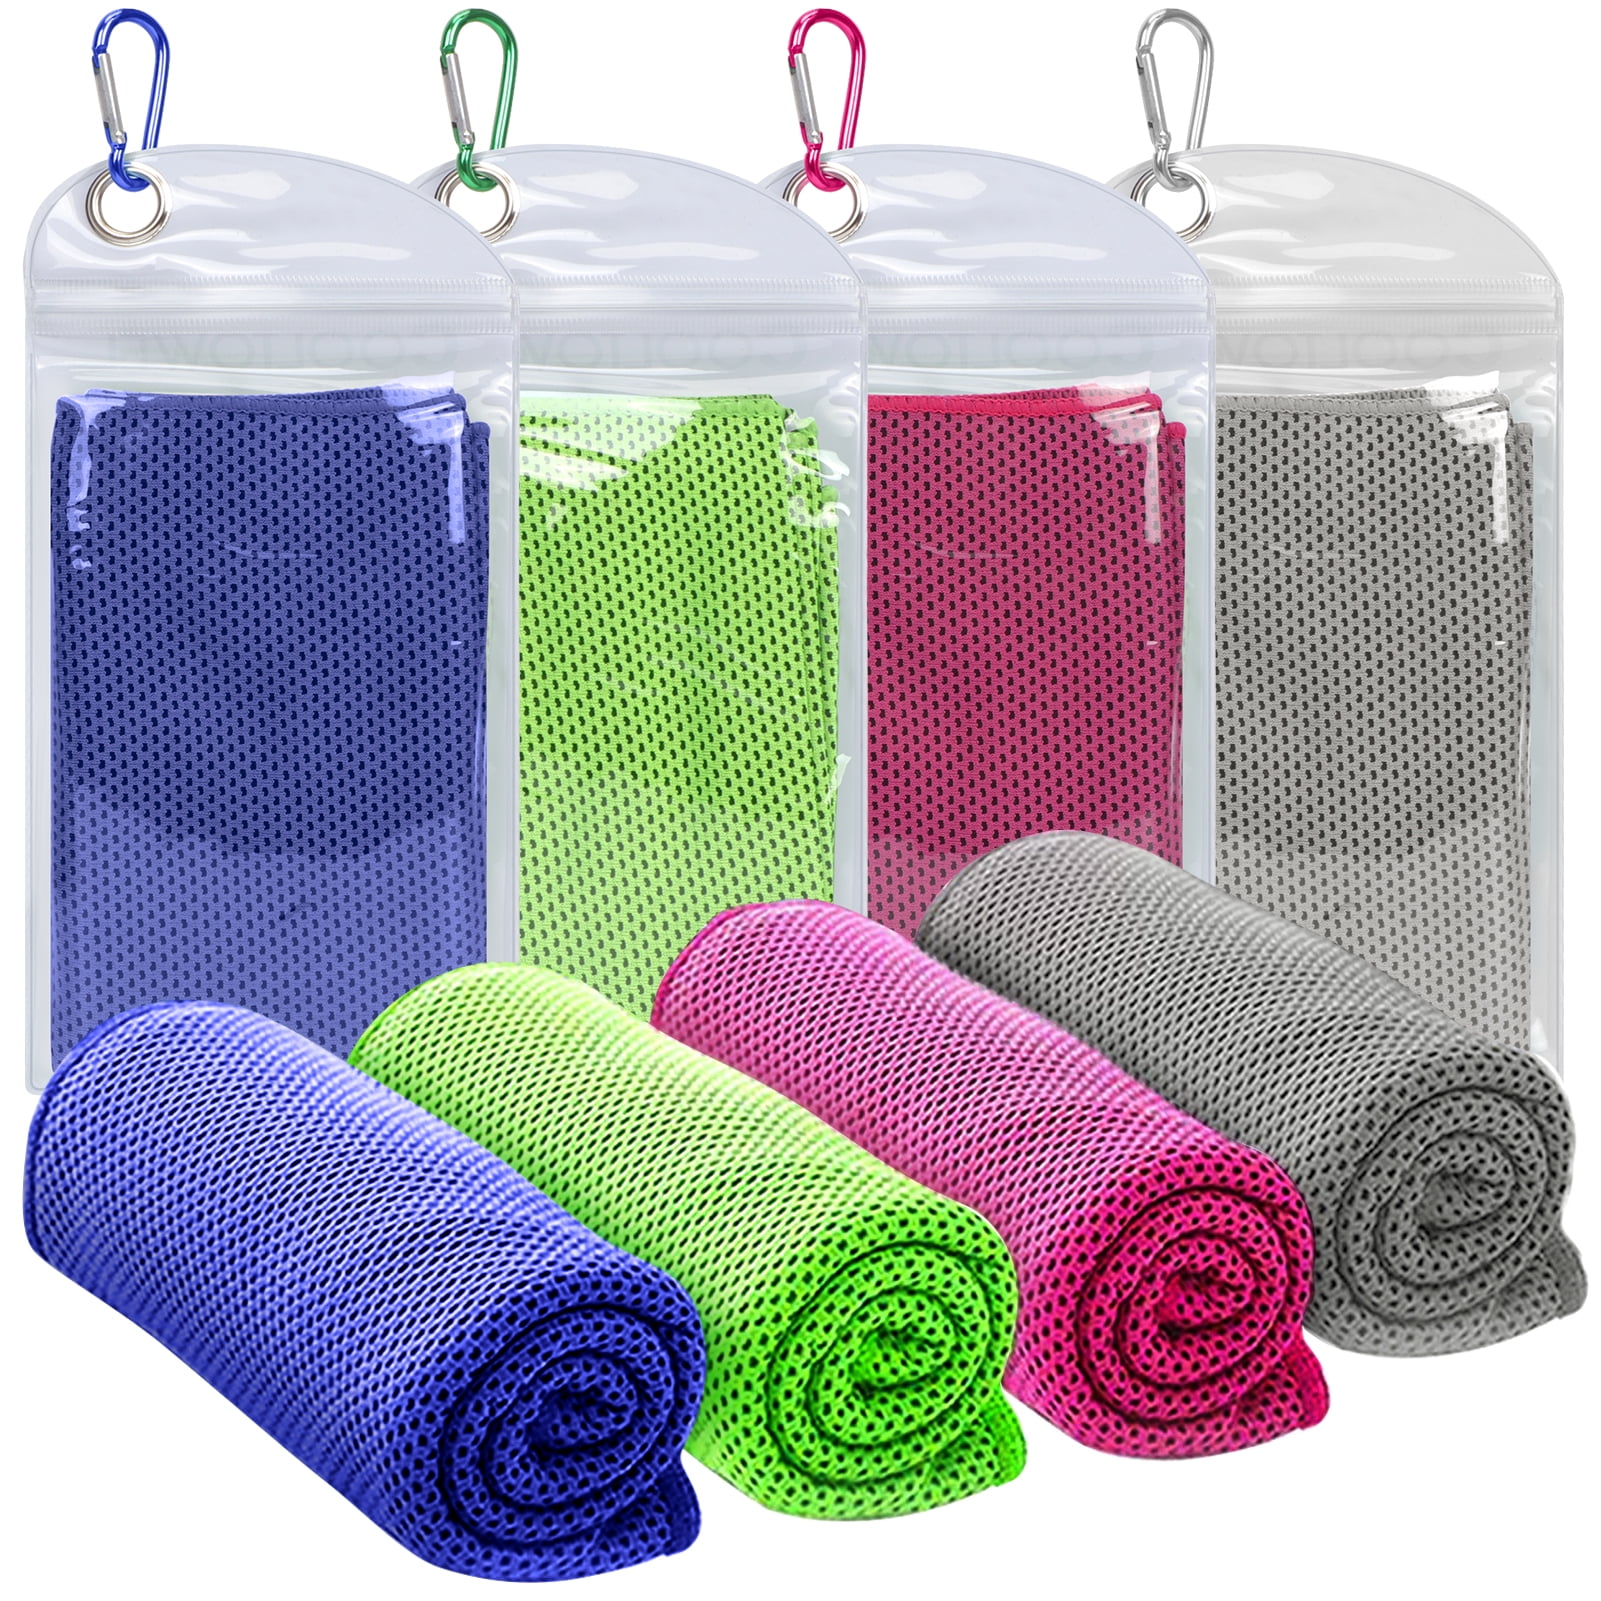 VaporActive Yoga Mat Cover Hand Towel Bundle Strawberry Mission 